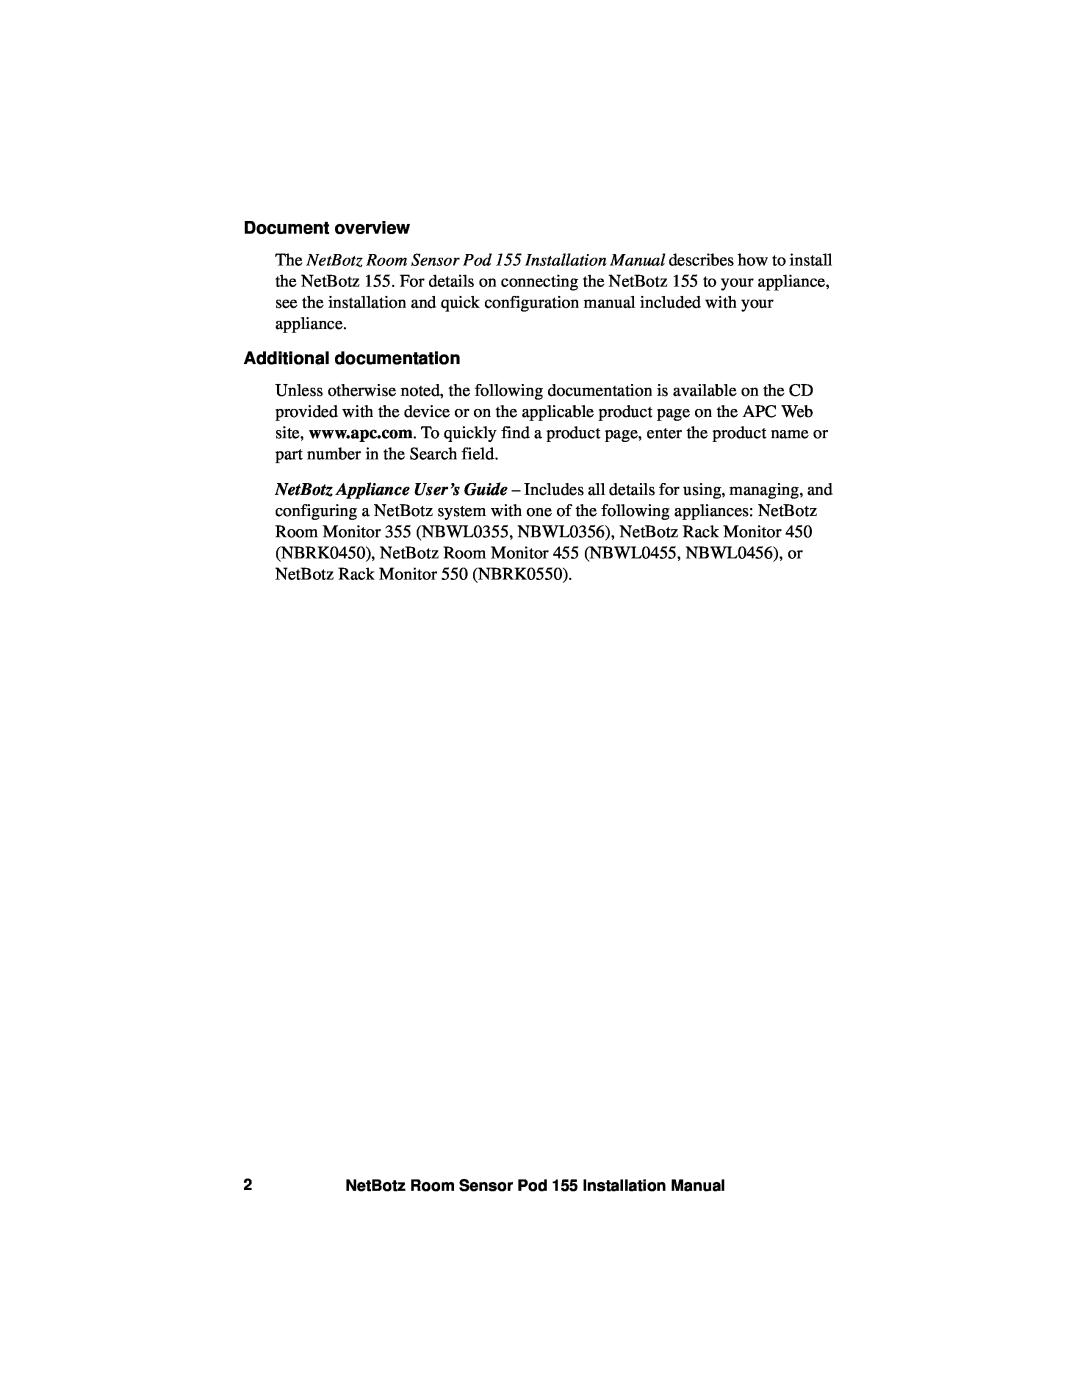 APC NBPD0155 Document overview, Additional documentation, NetBotz Room Sensor Pod 155 Installation Manual 